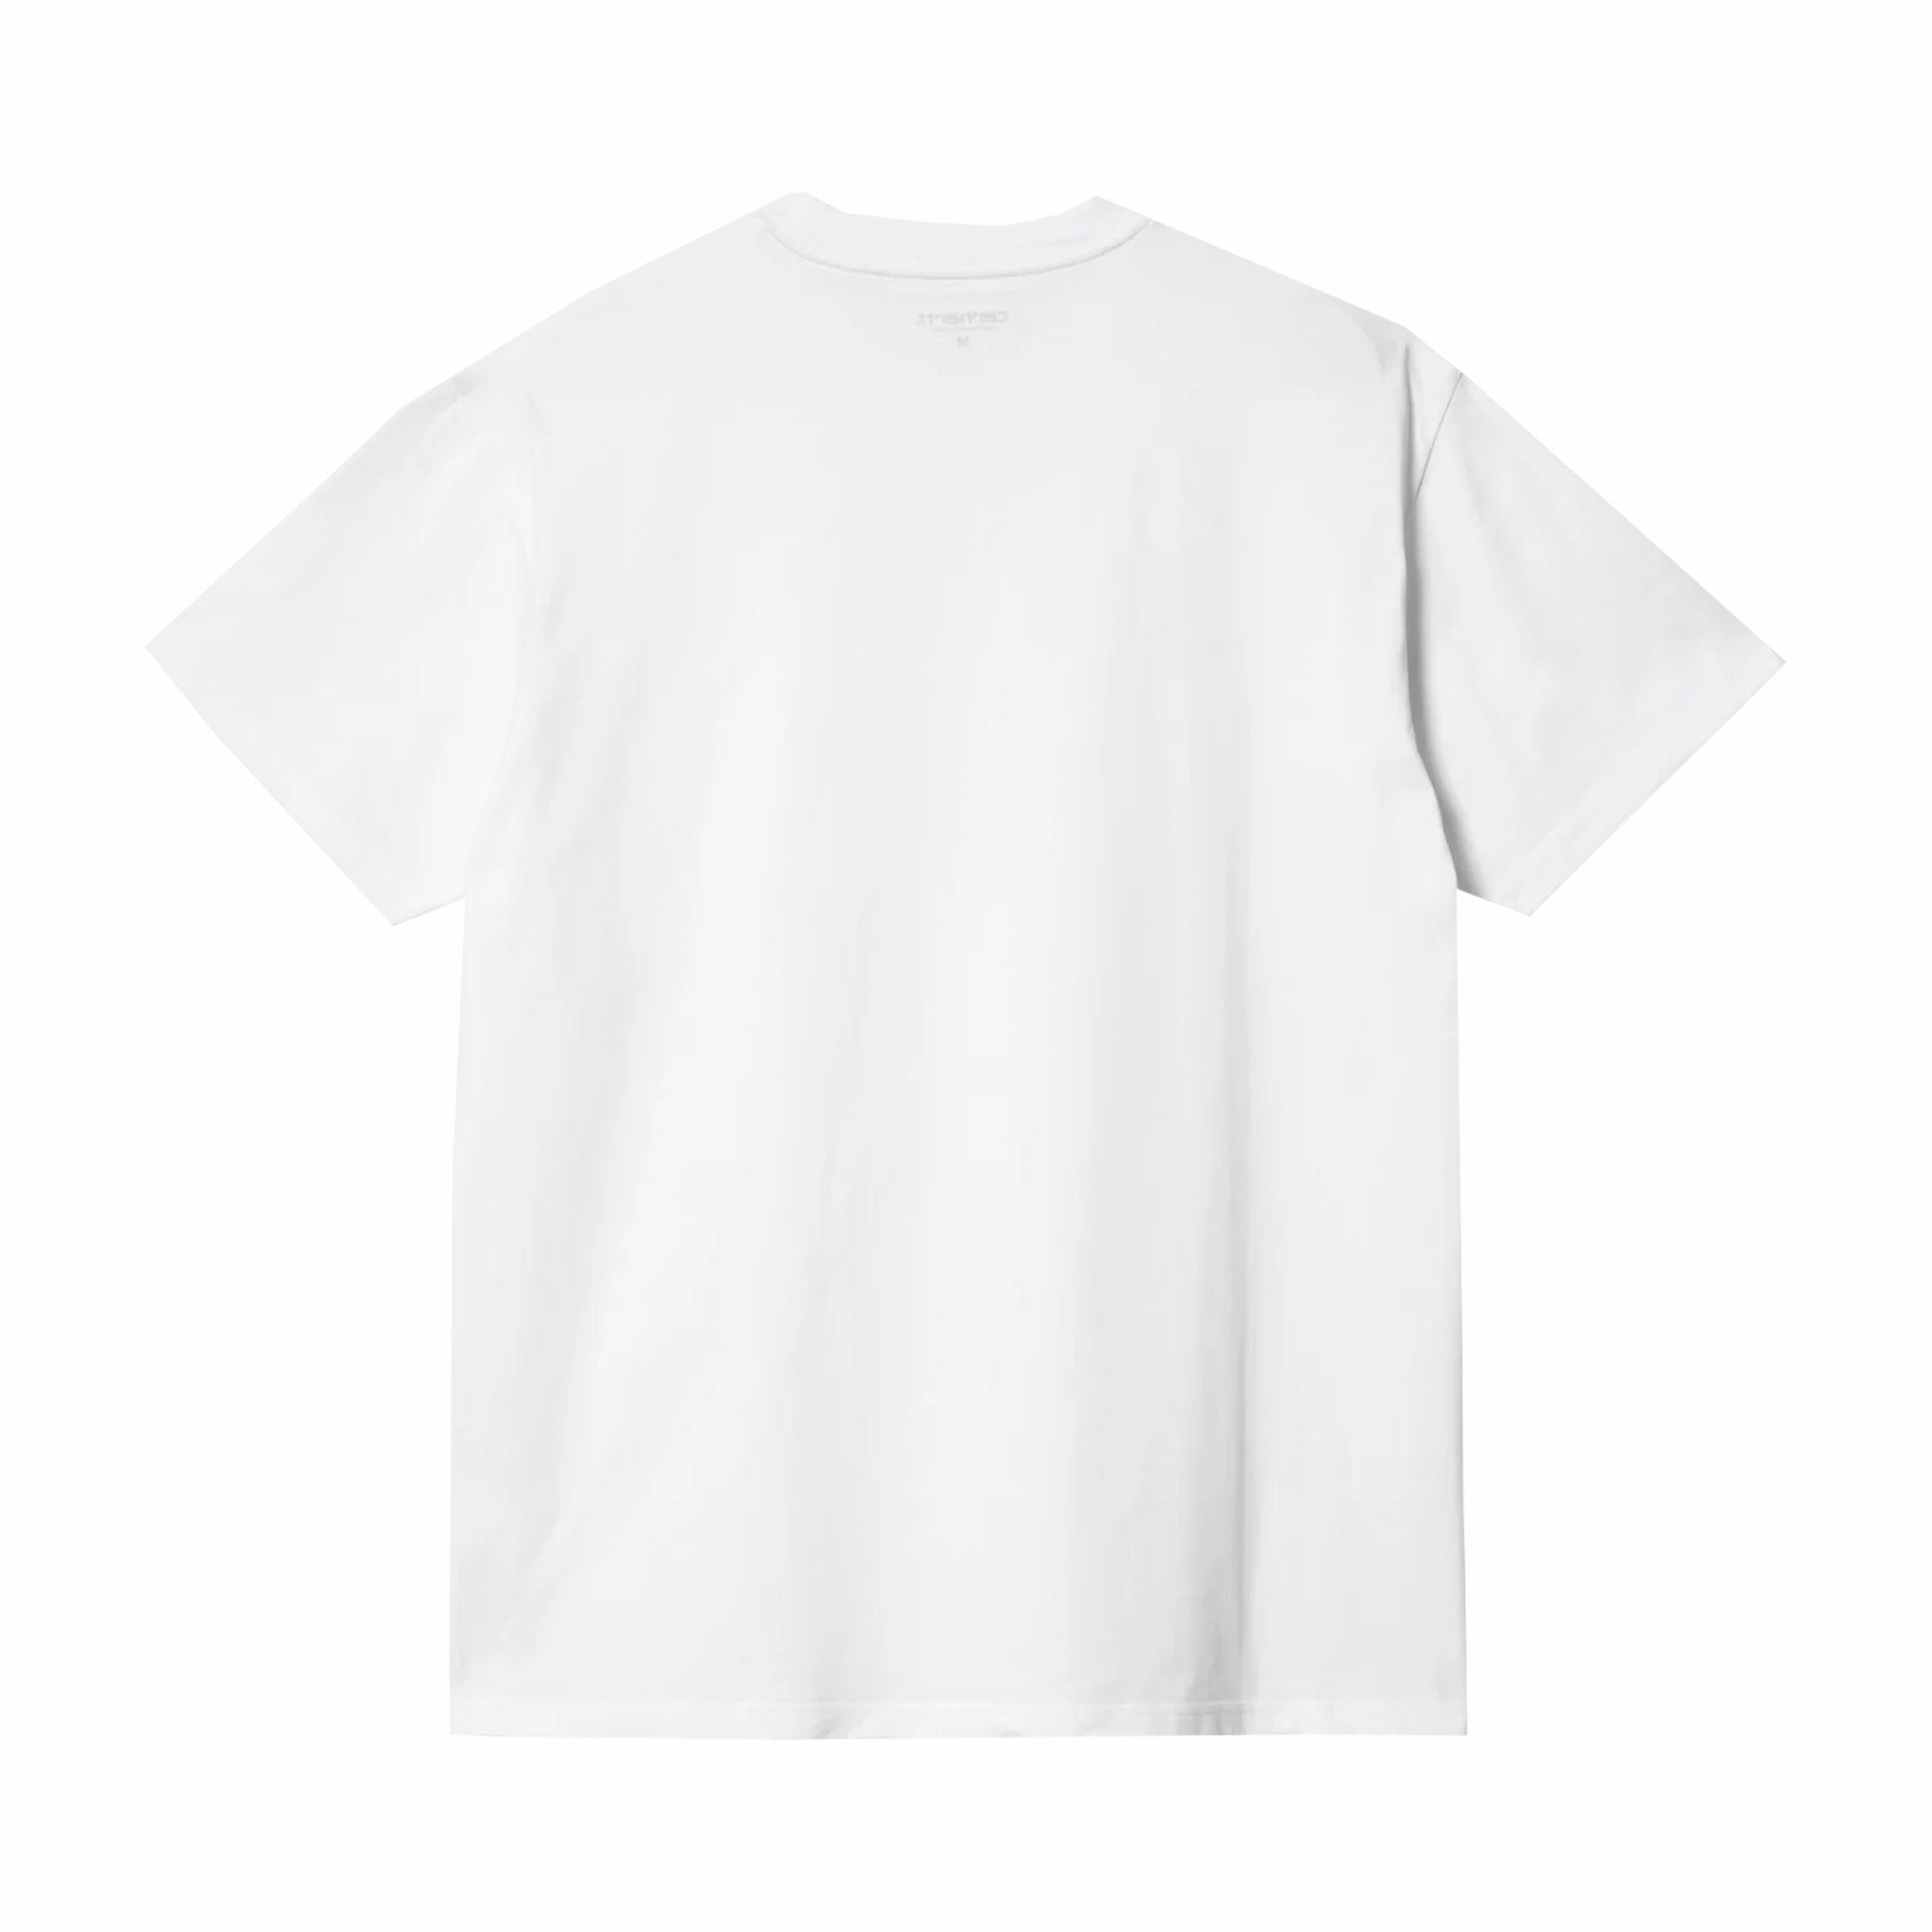 Carhartt WIP S/S Pocket Heart T-Shirt (White) - August Shop